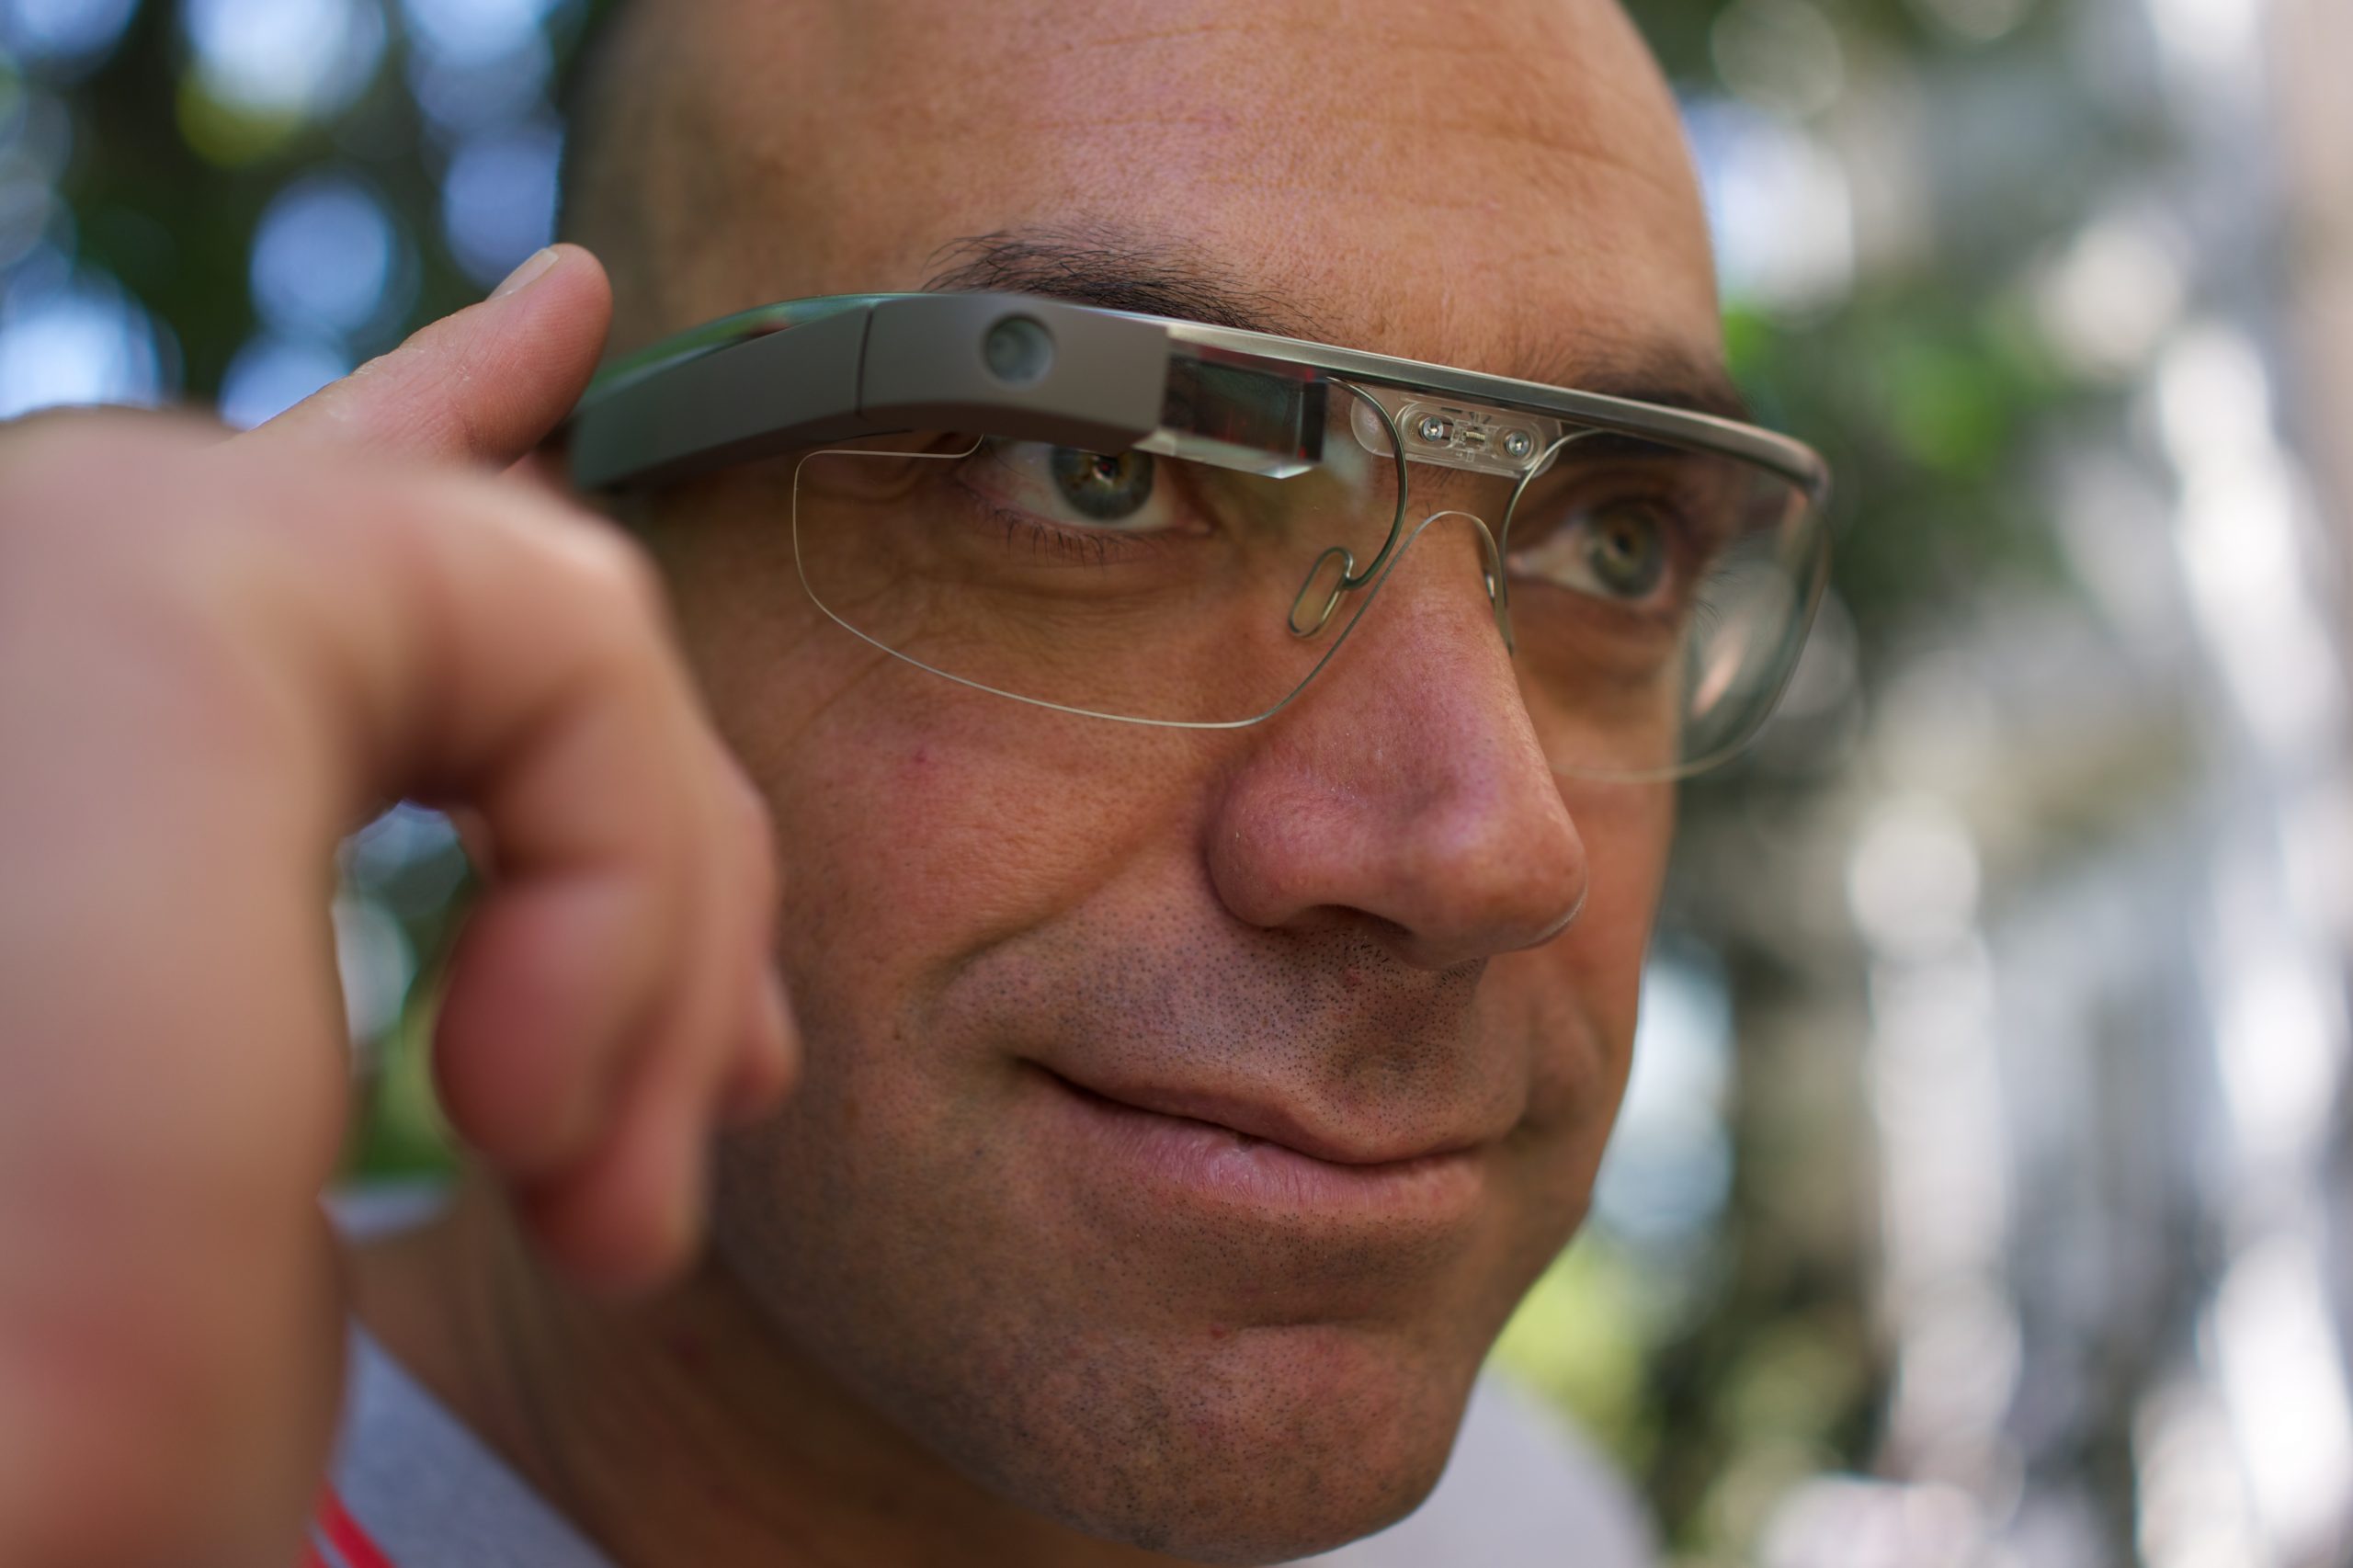 Google Glass control